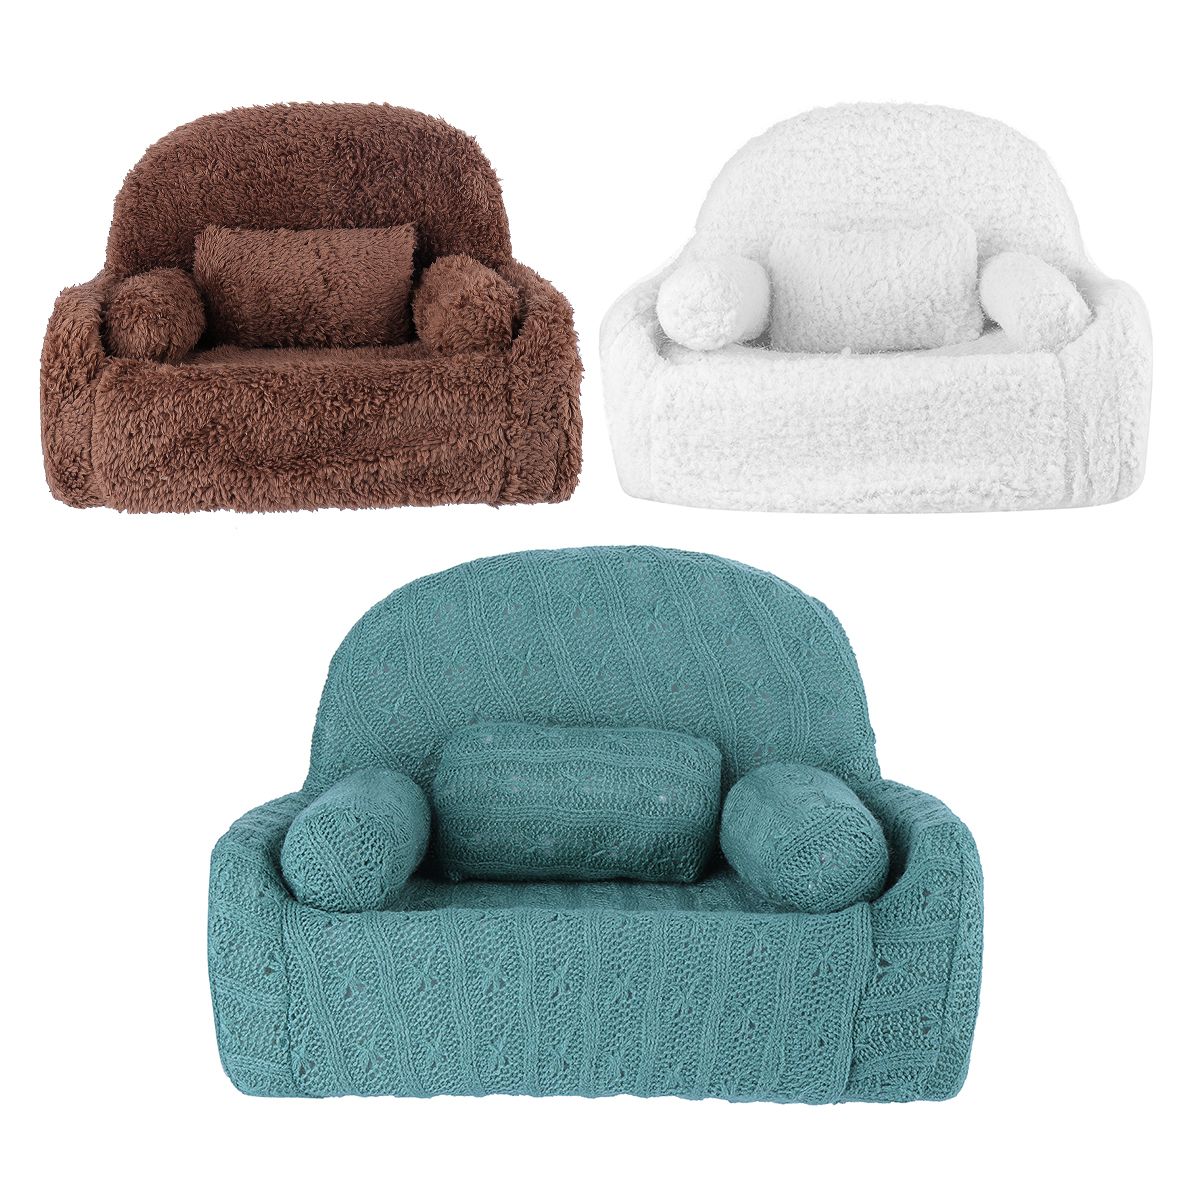 Newborn-Baby-3-Cushions-Sofa-Seat-Photo-Props-Studio-Photography-Backdrop-Decorations-1573677